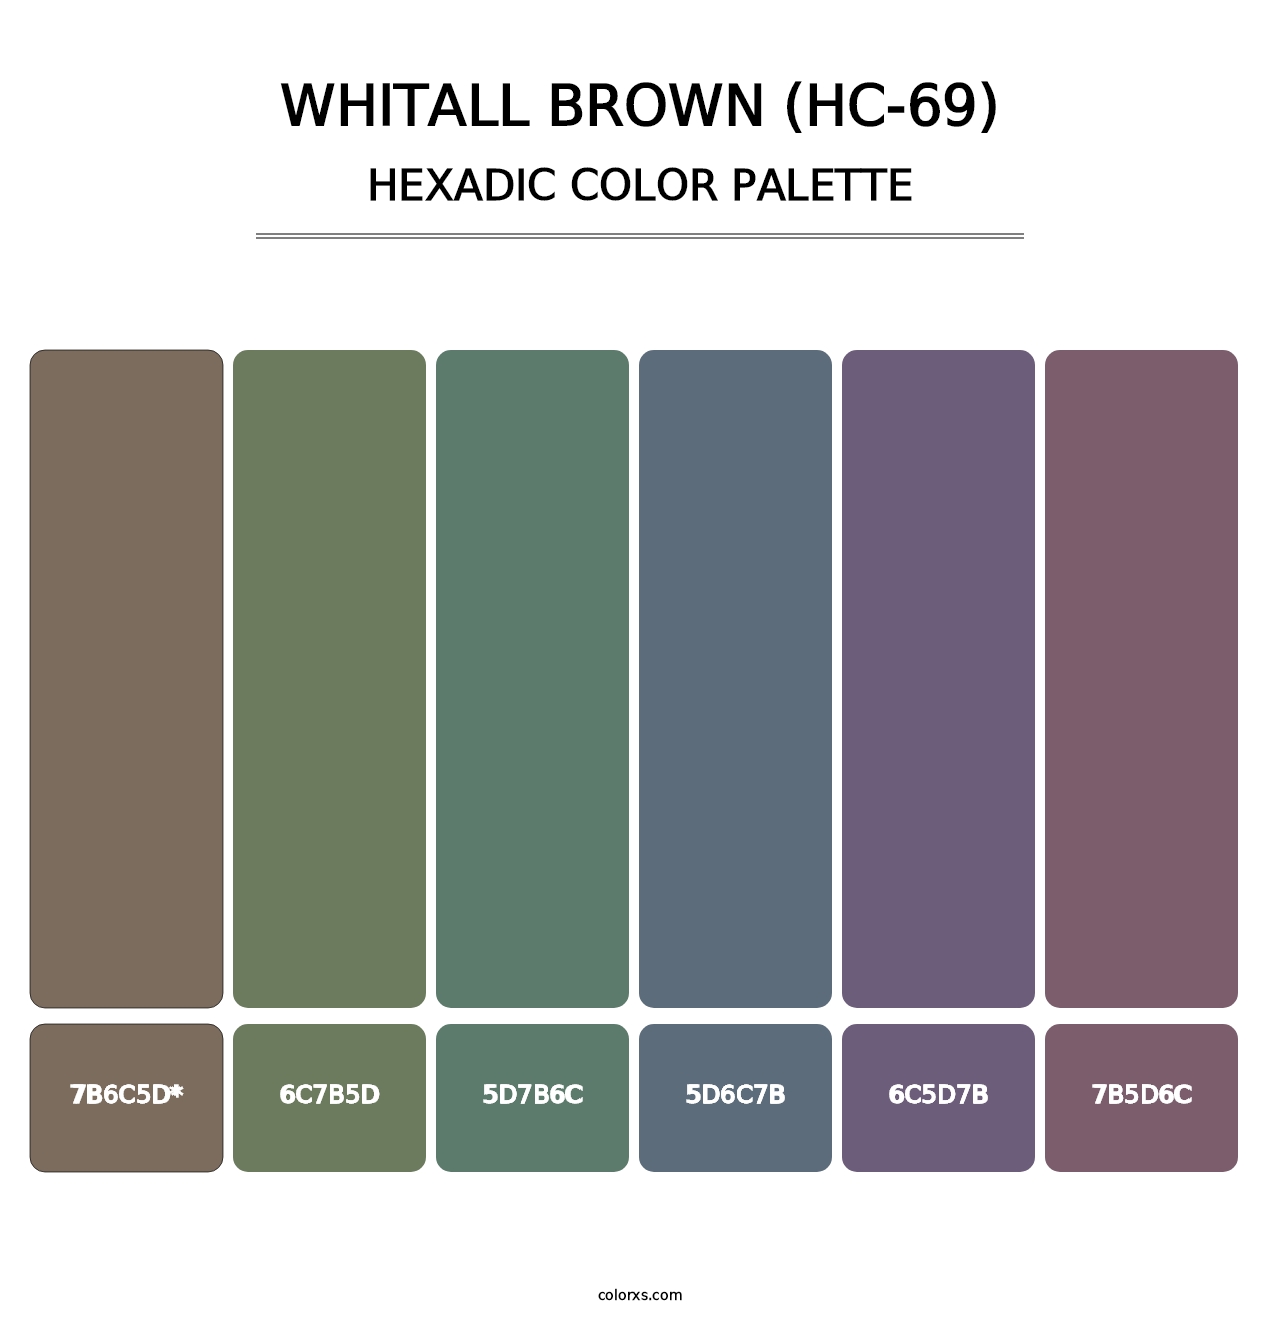 Whitall Brown (HC-69) - Hexadic Color Palette